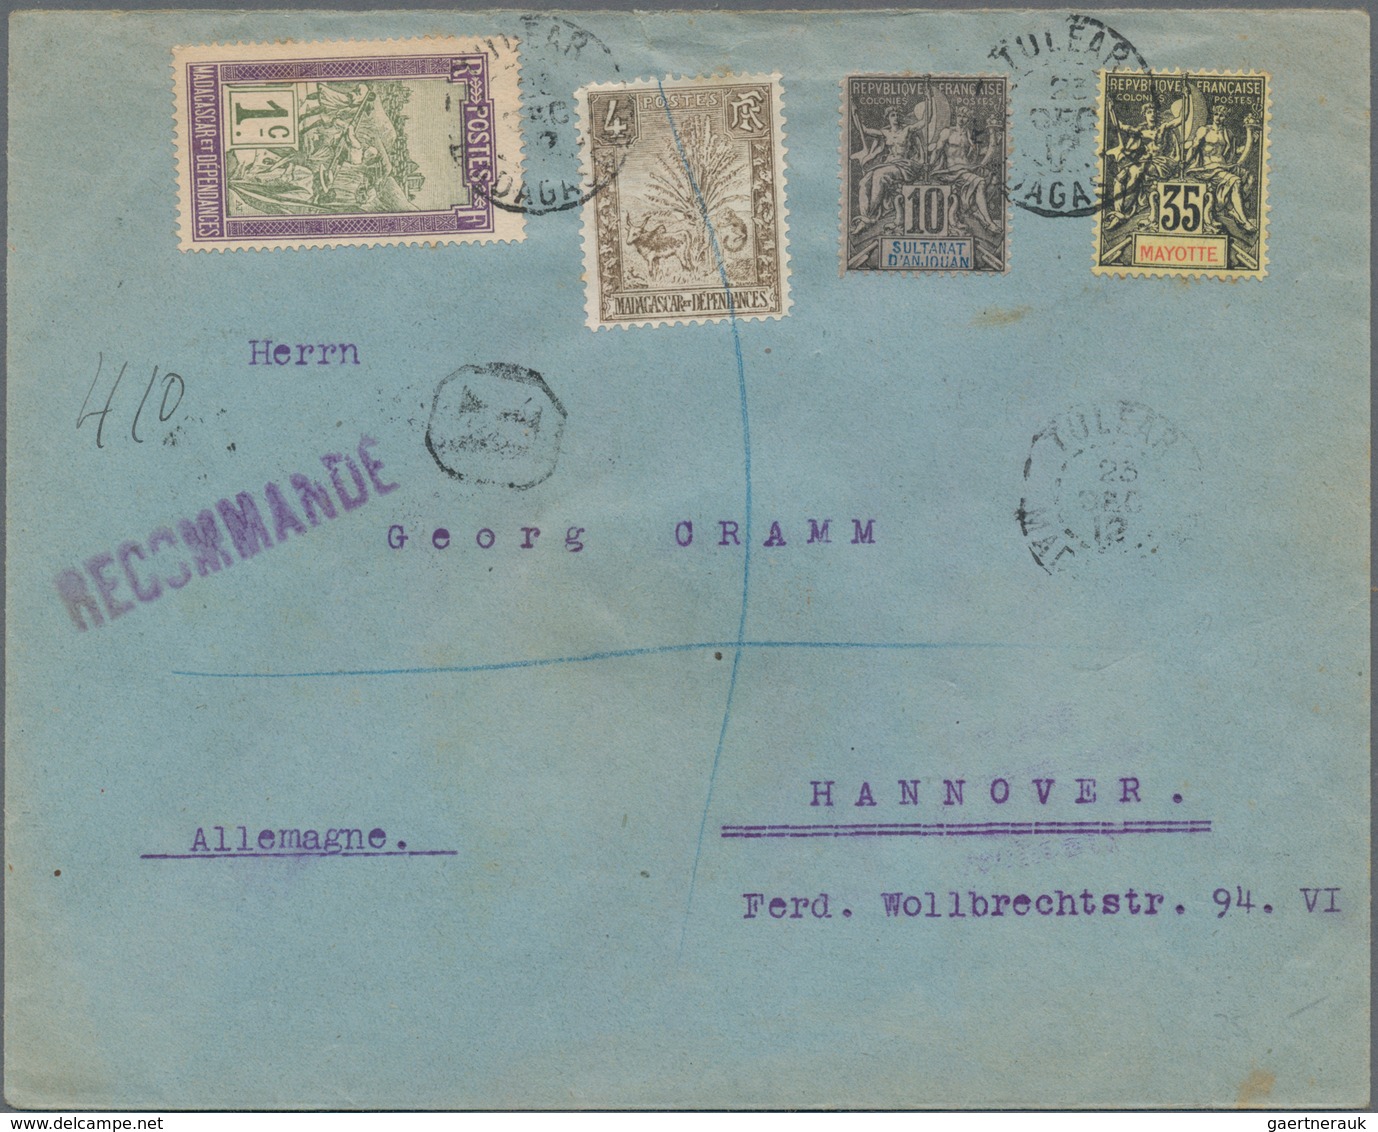 Madagaskar: 1912, Registered Mail From Toléar/Toliara Madagaskar To Hannover Franked By One C Yellow - Madagaskar (1960-...)